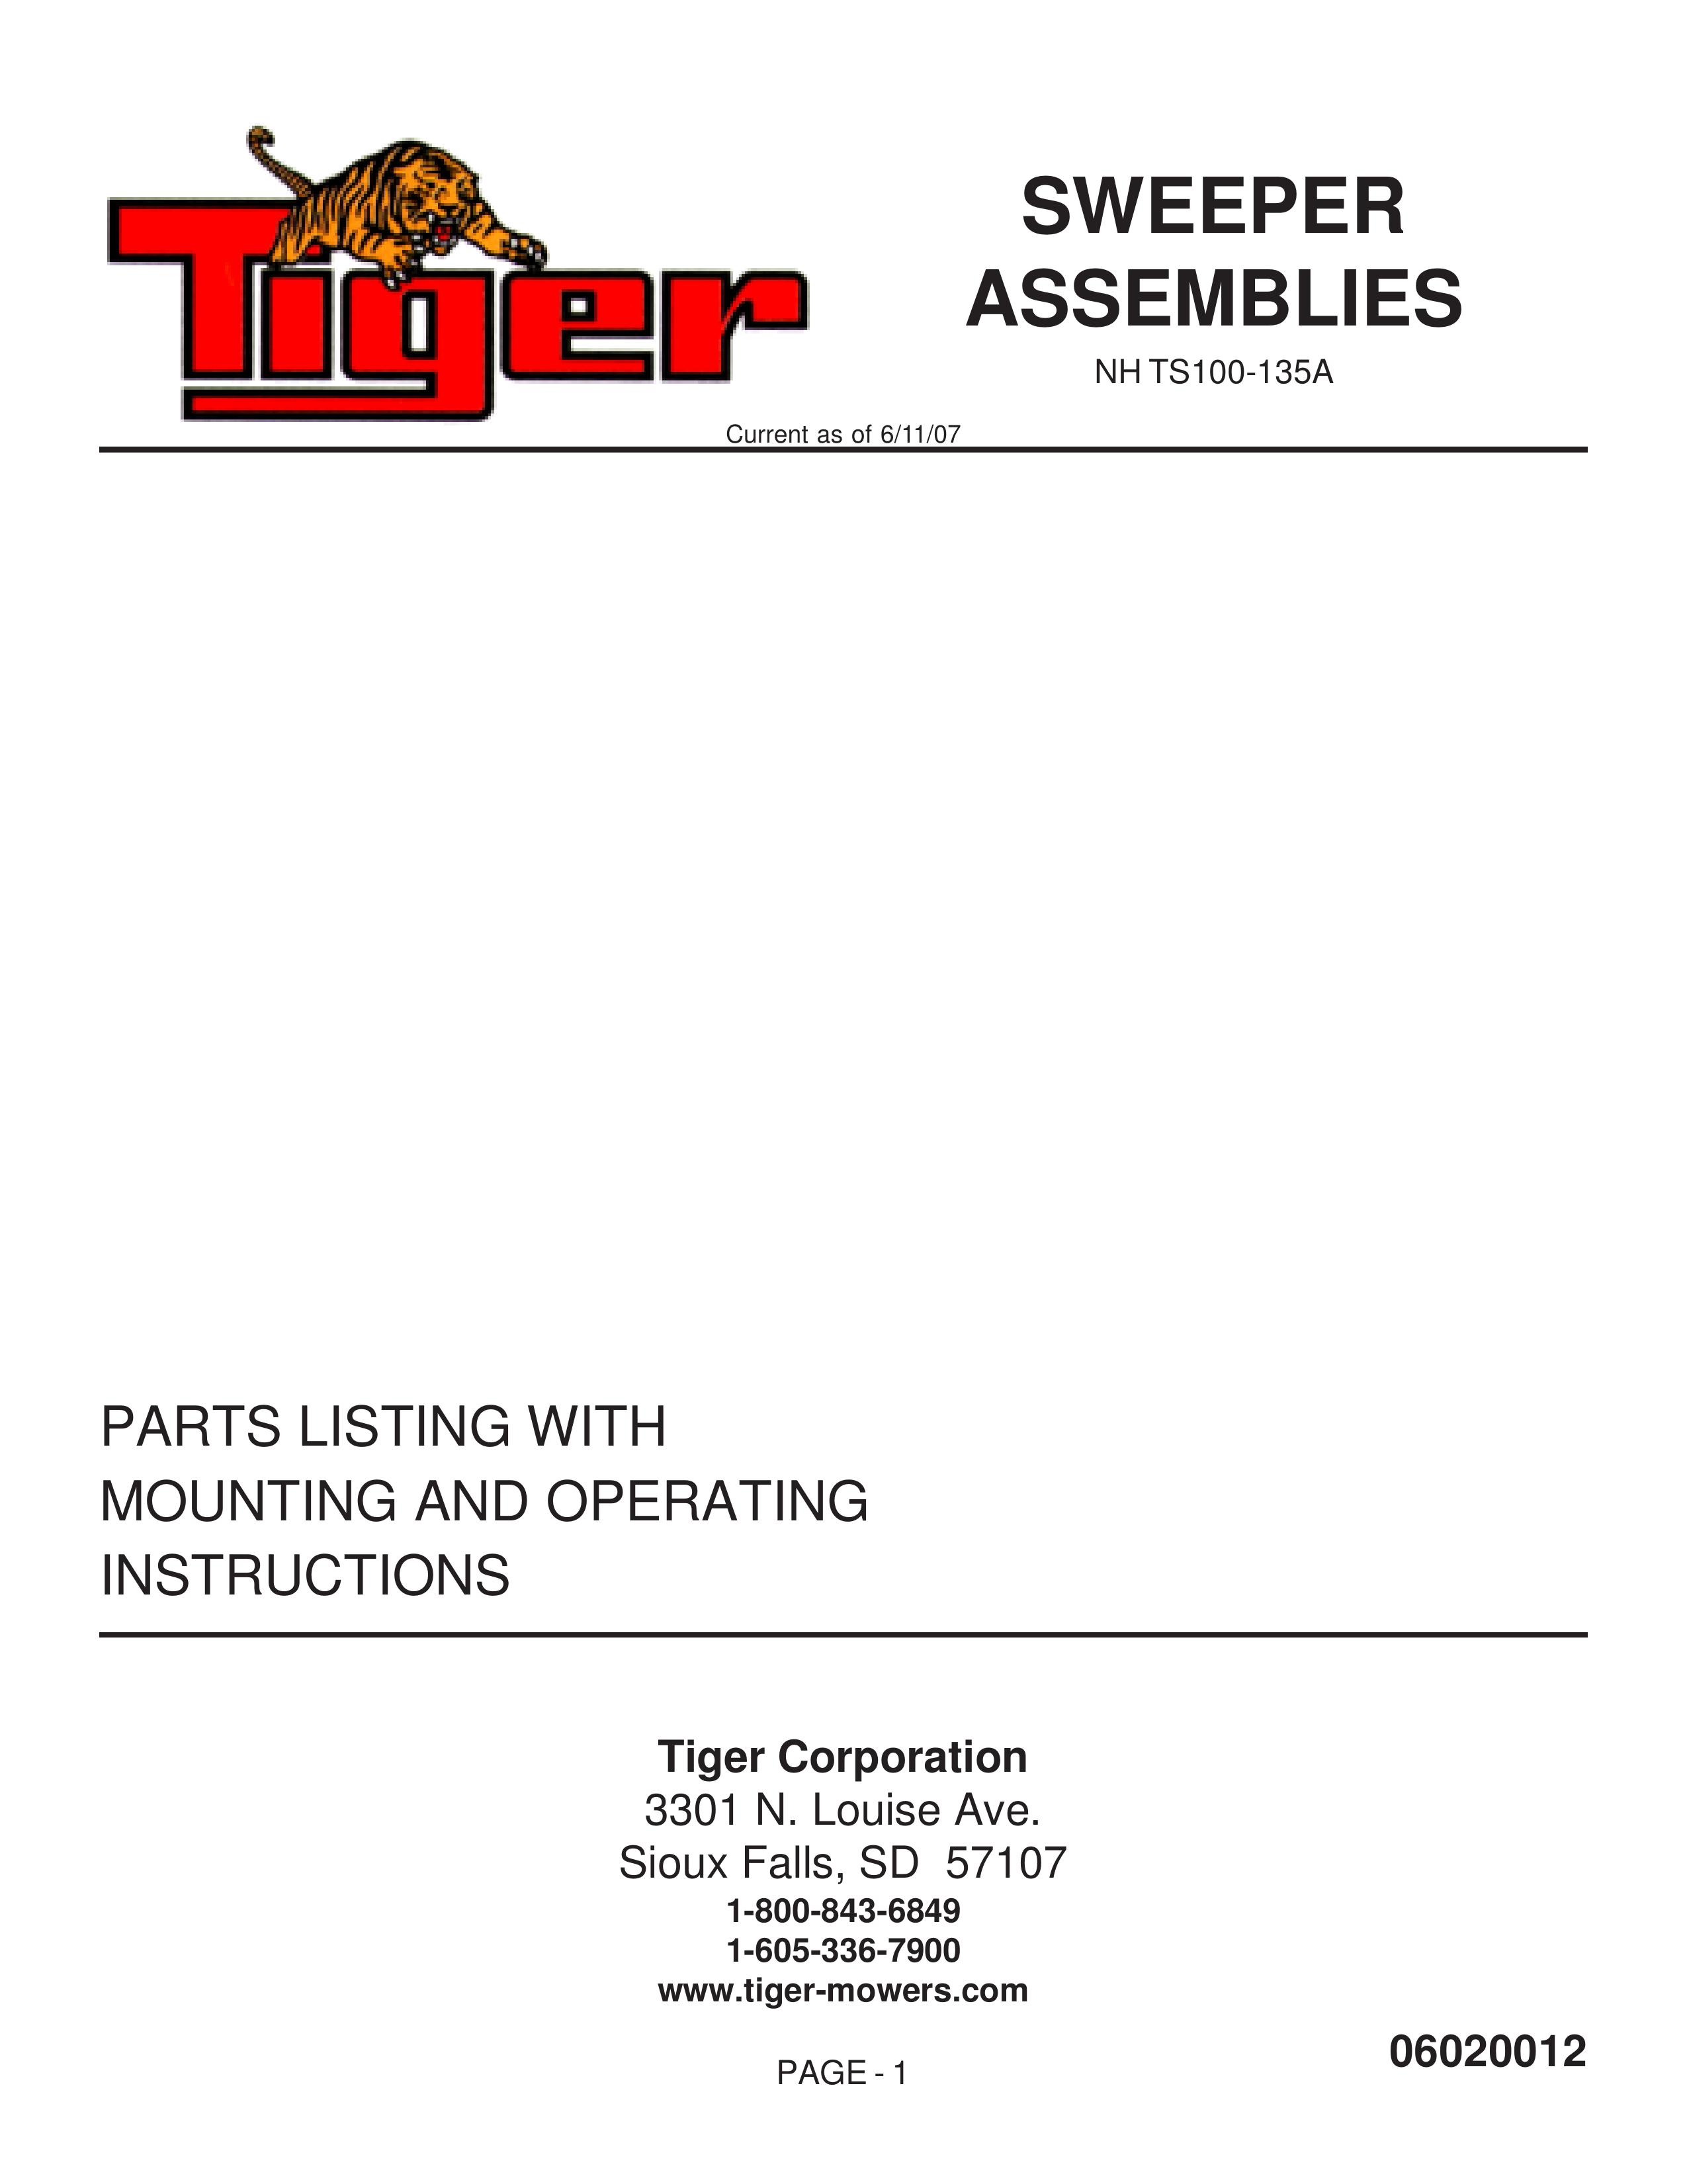 Tiger Products Co., Ltd NH TS100-135A Lawn Mower User Manual